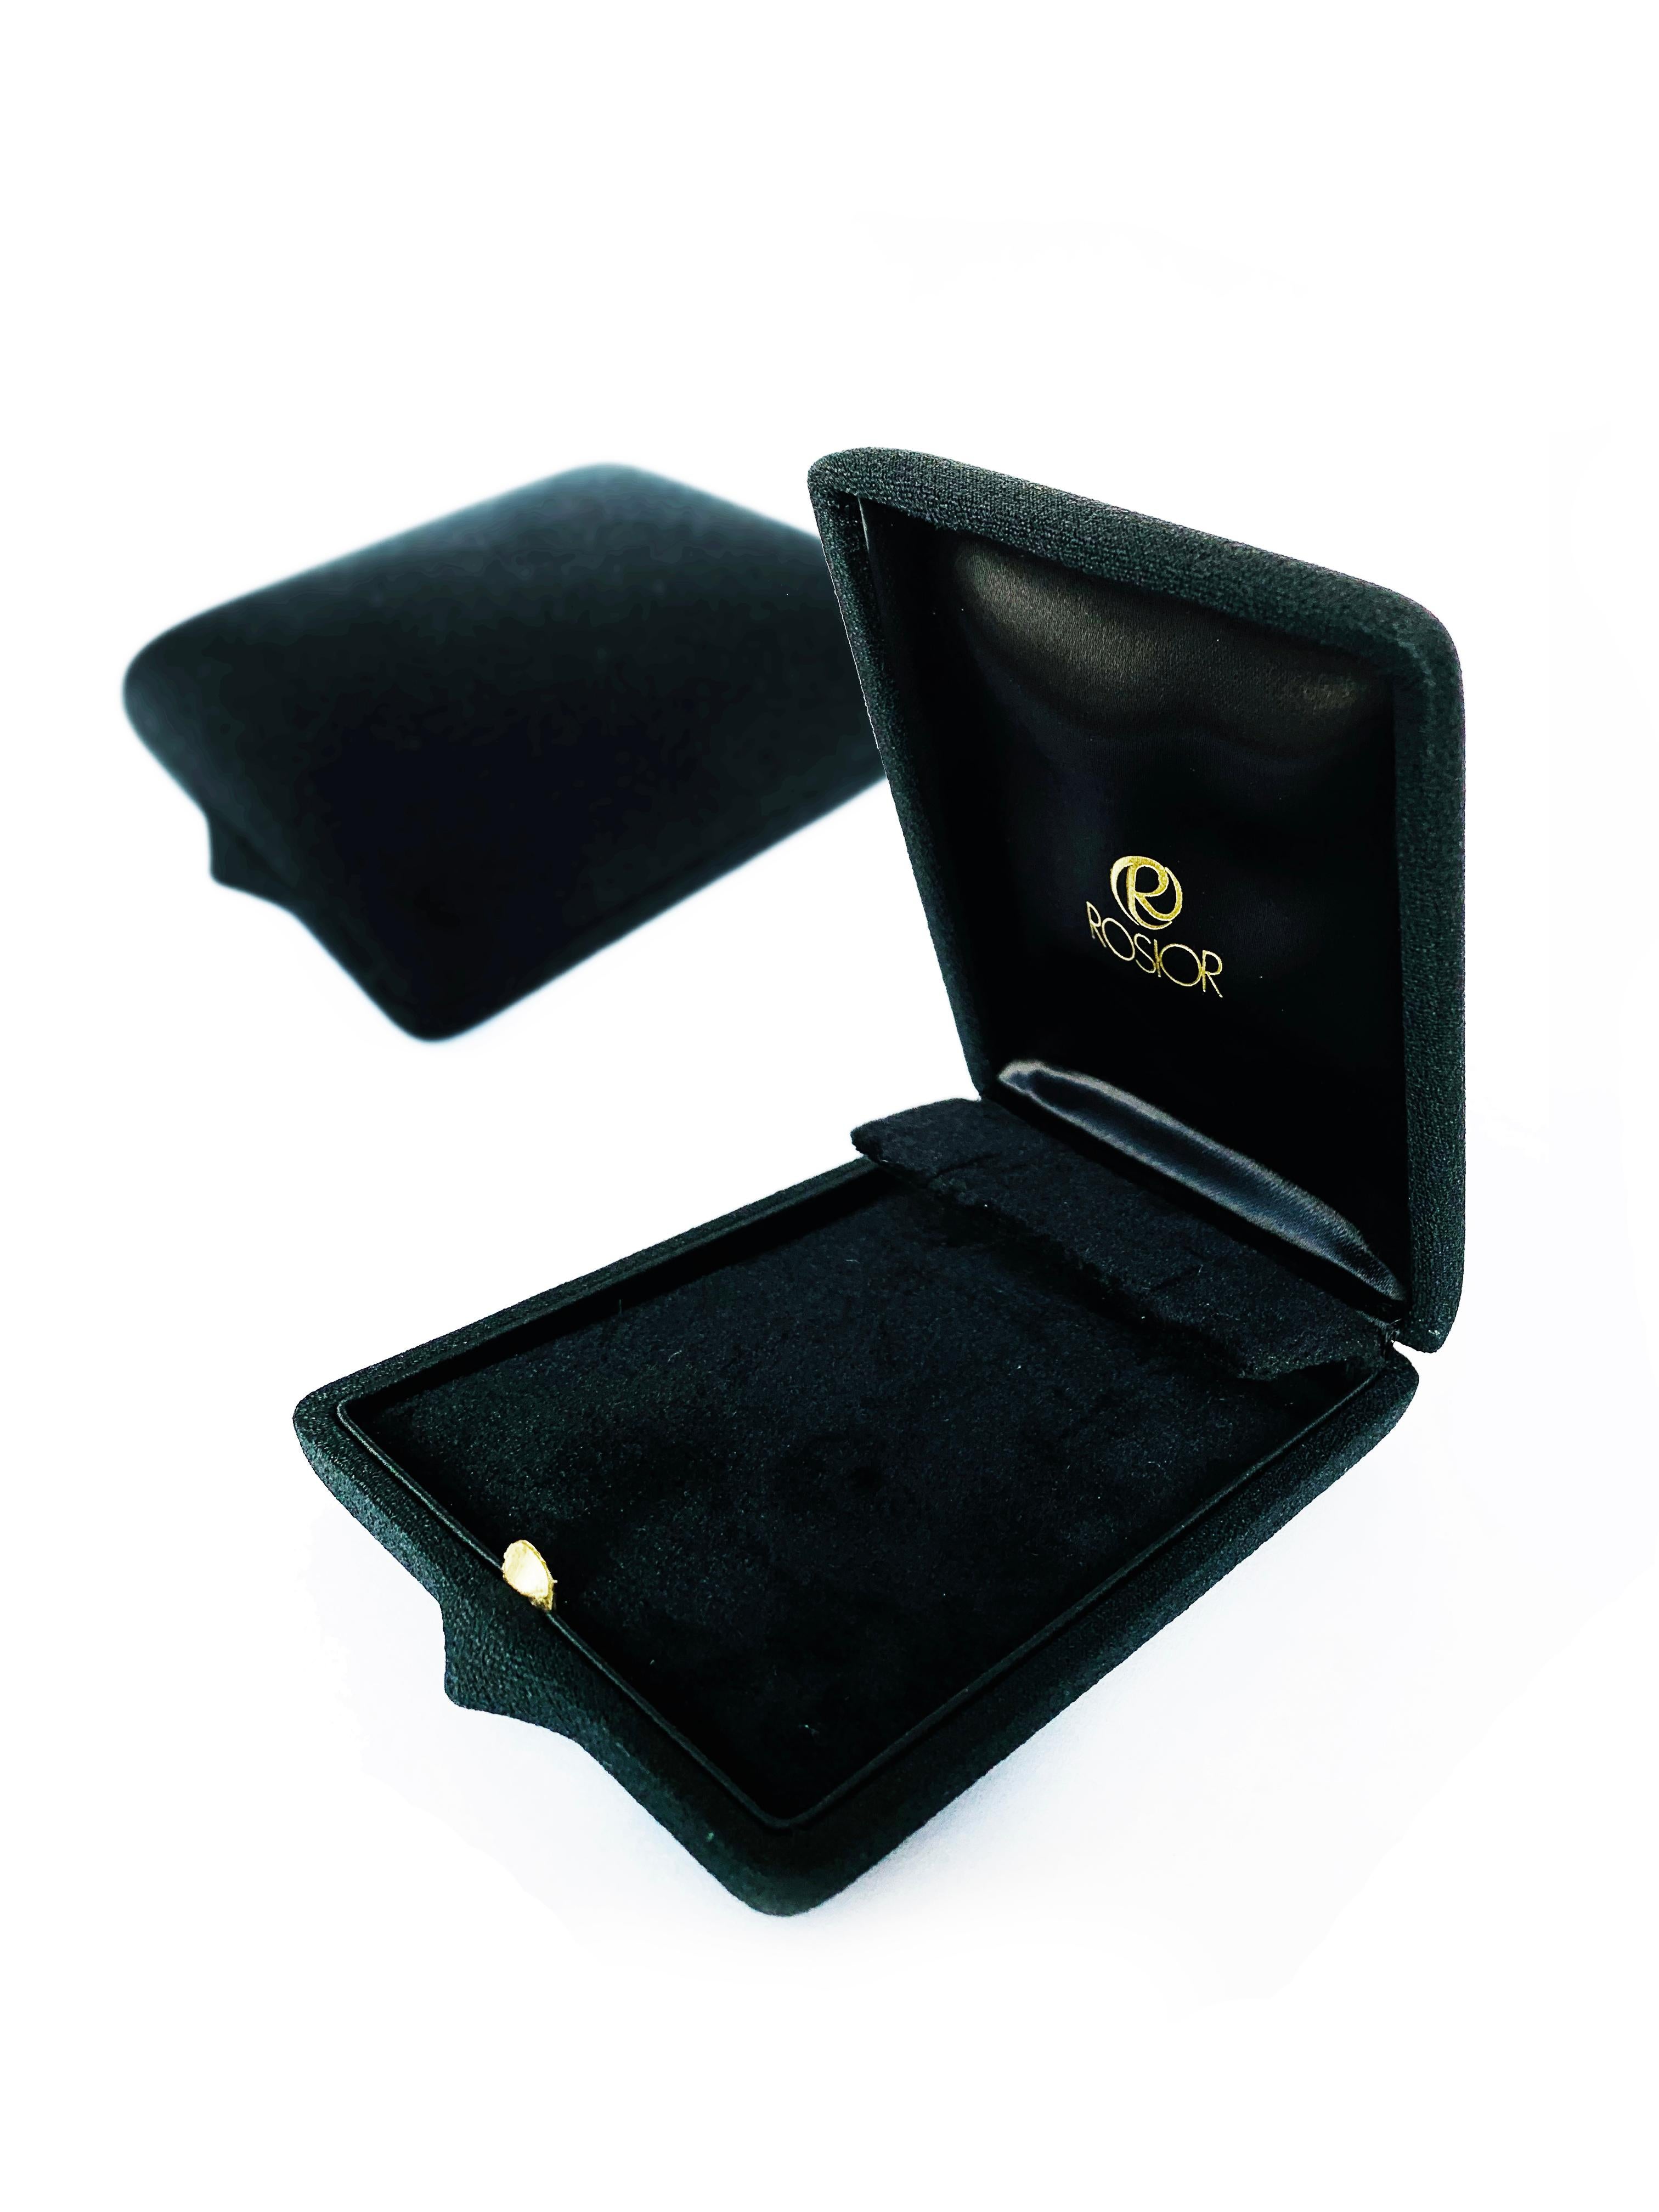 5.63 Carat Diamond Hoop Earrings Set in Yellow Gold For Sale 5